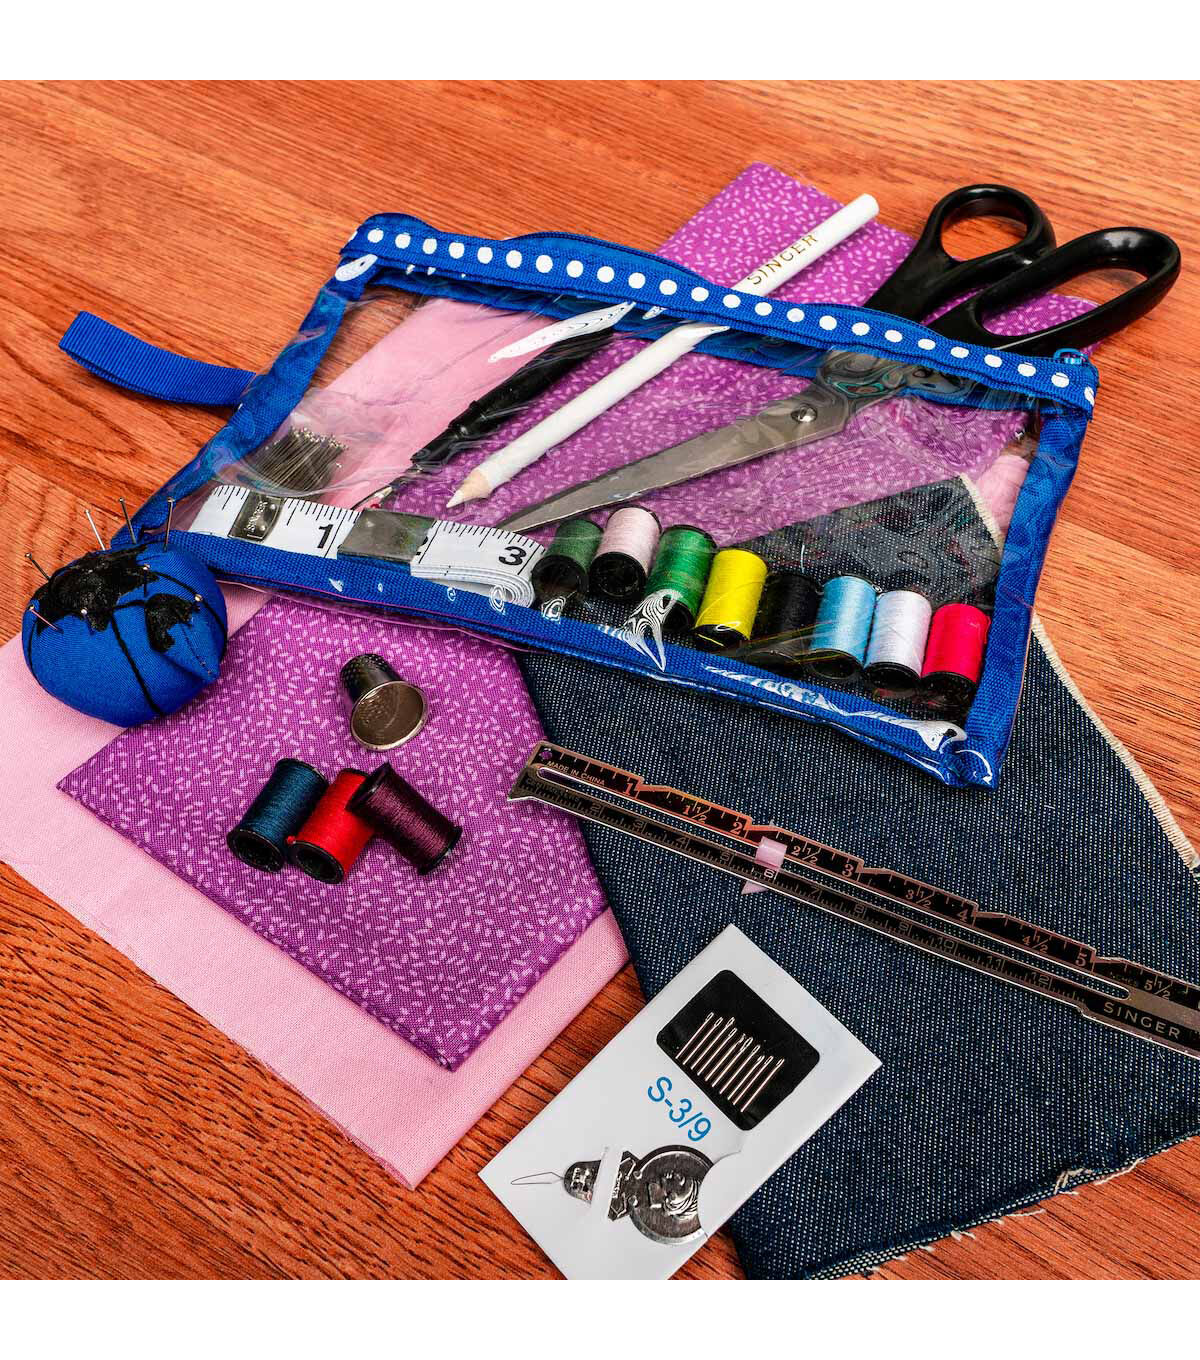 Singer Beginner's Sewing Kit, Pink/Black - 130 pieces